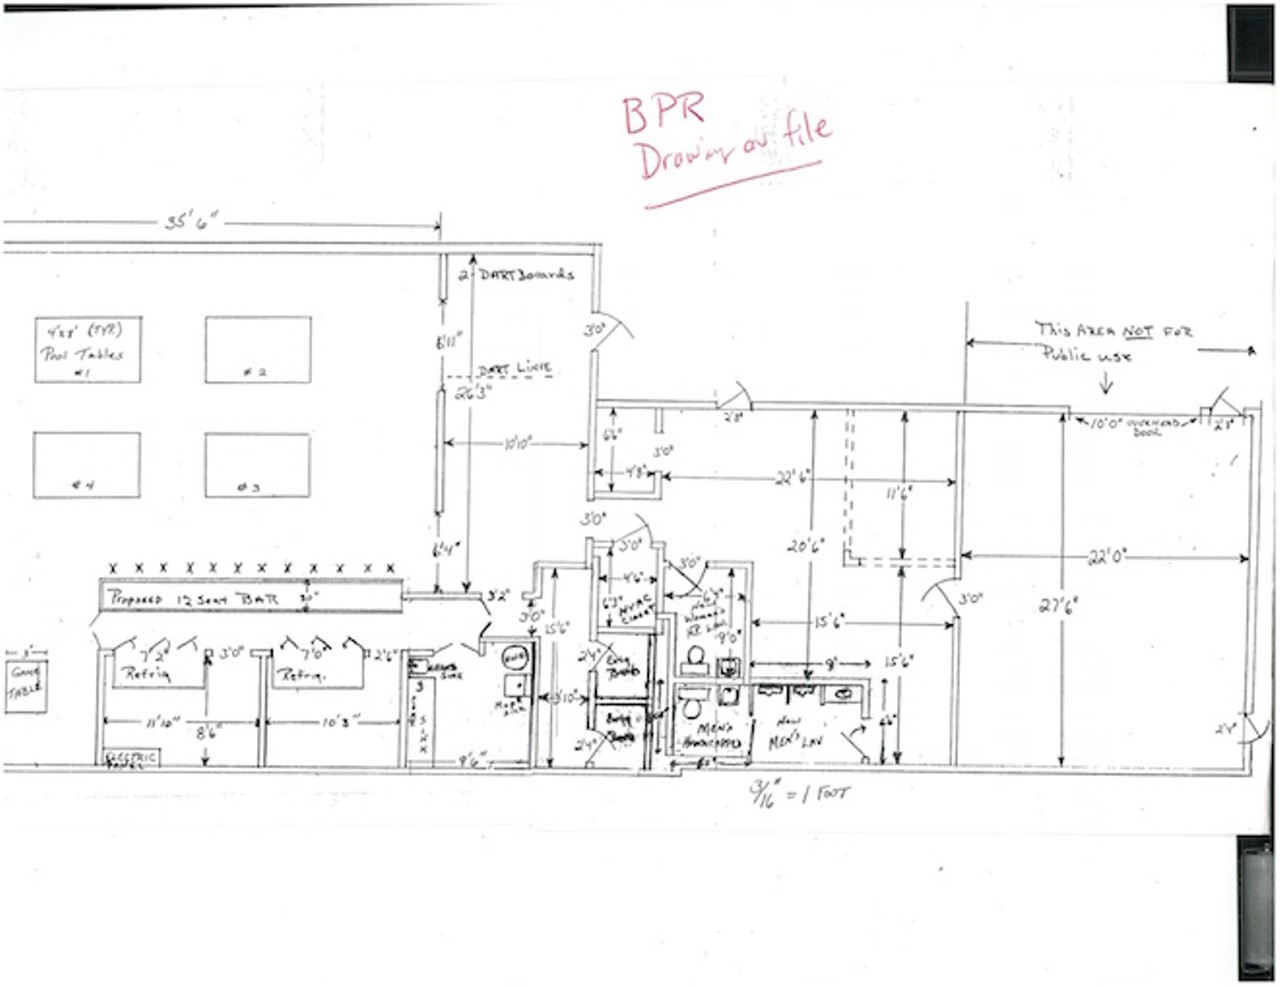 Original Will's Pub floor plan